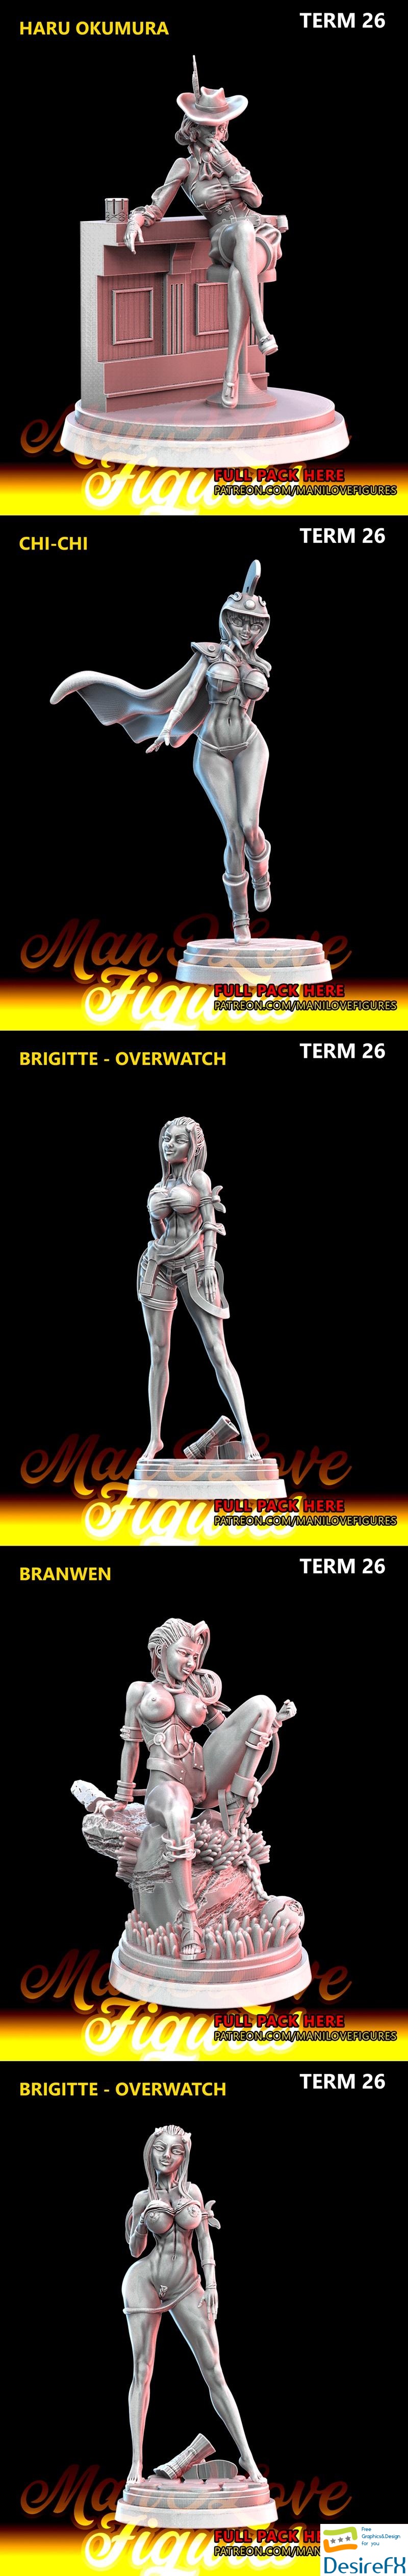 Man I Love Figures - Term 26 3D Print